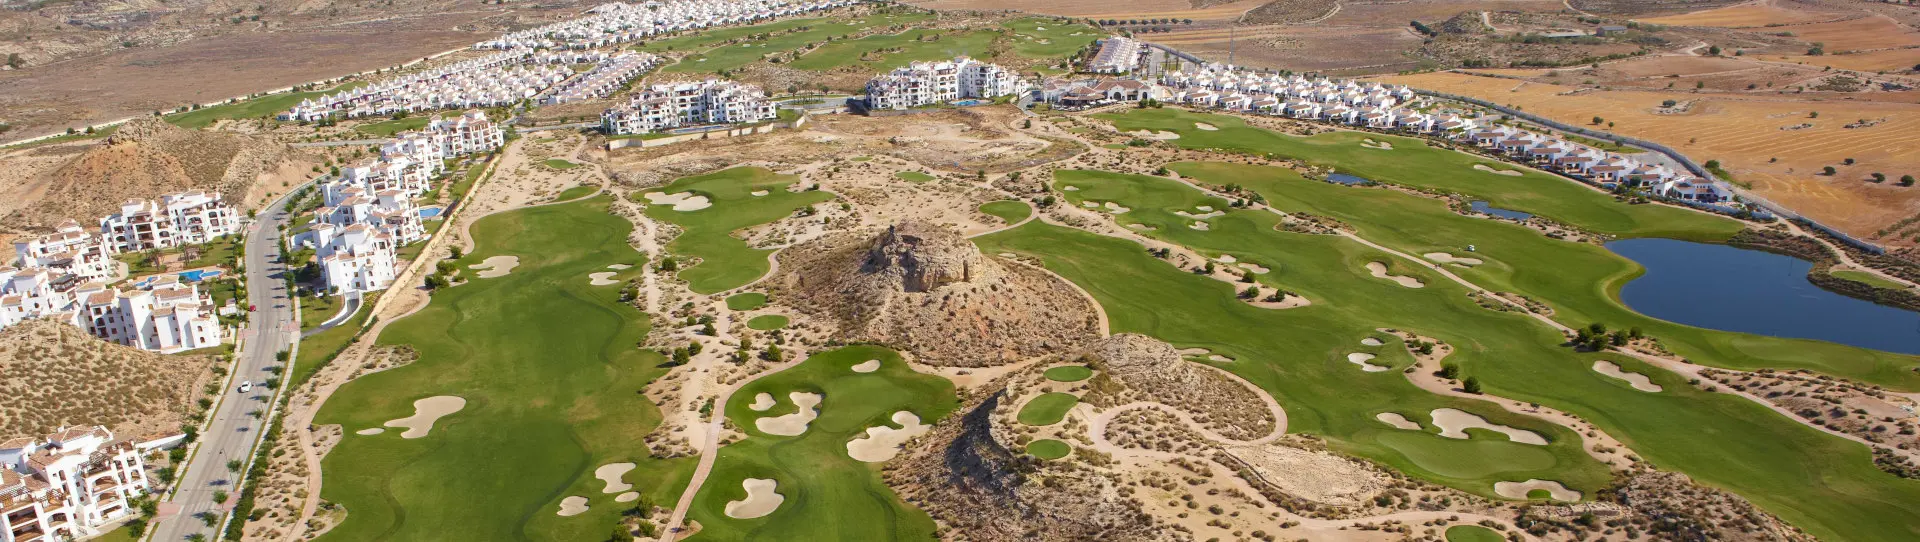 Spain golf courses - El Valle Golf Course - Photo 3